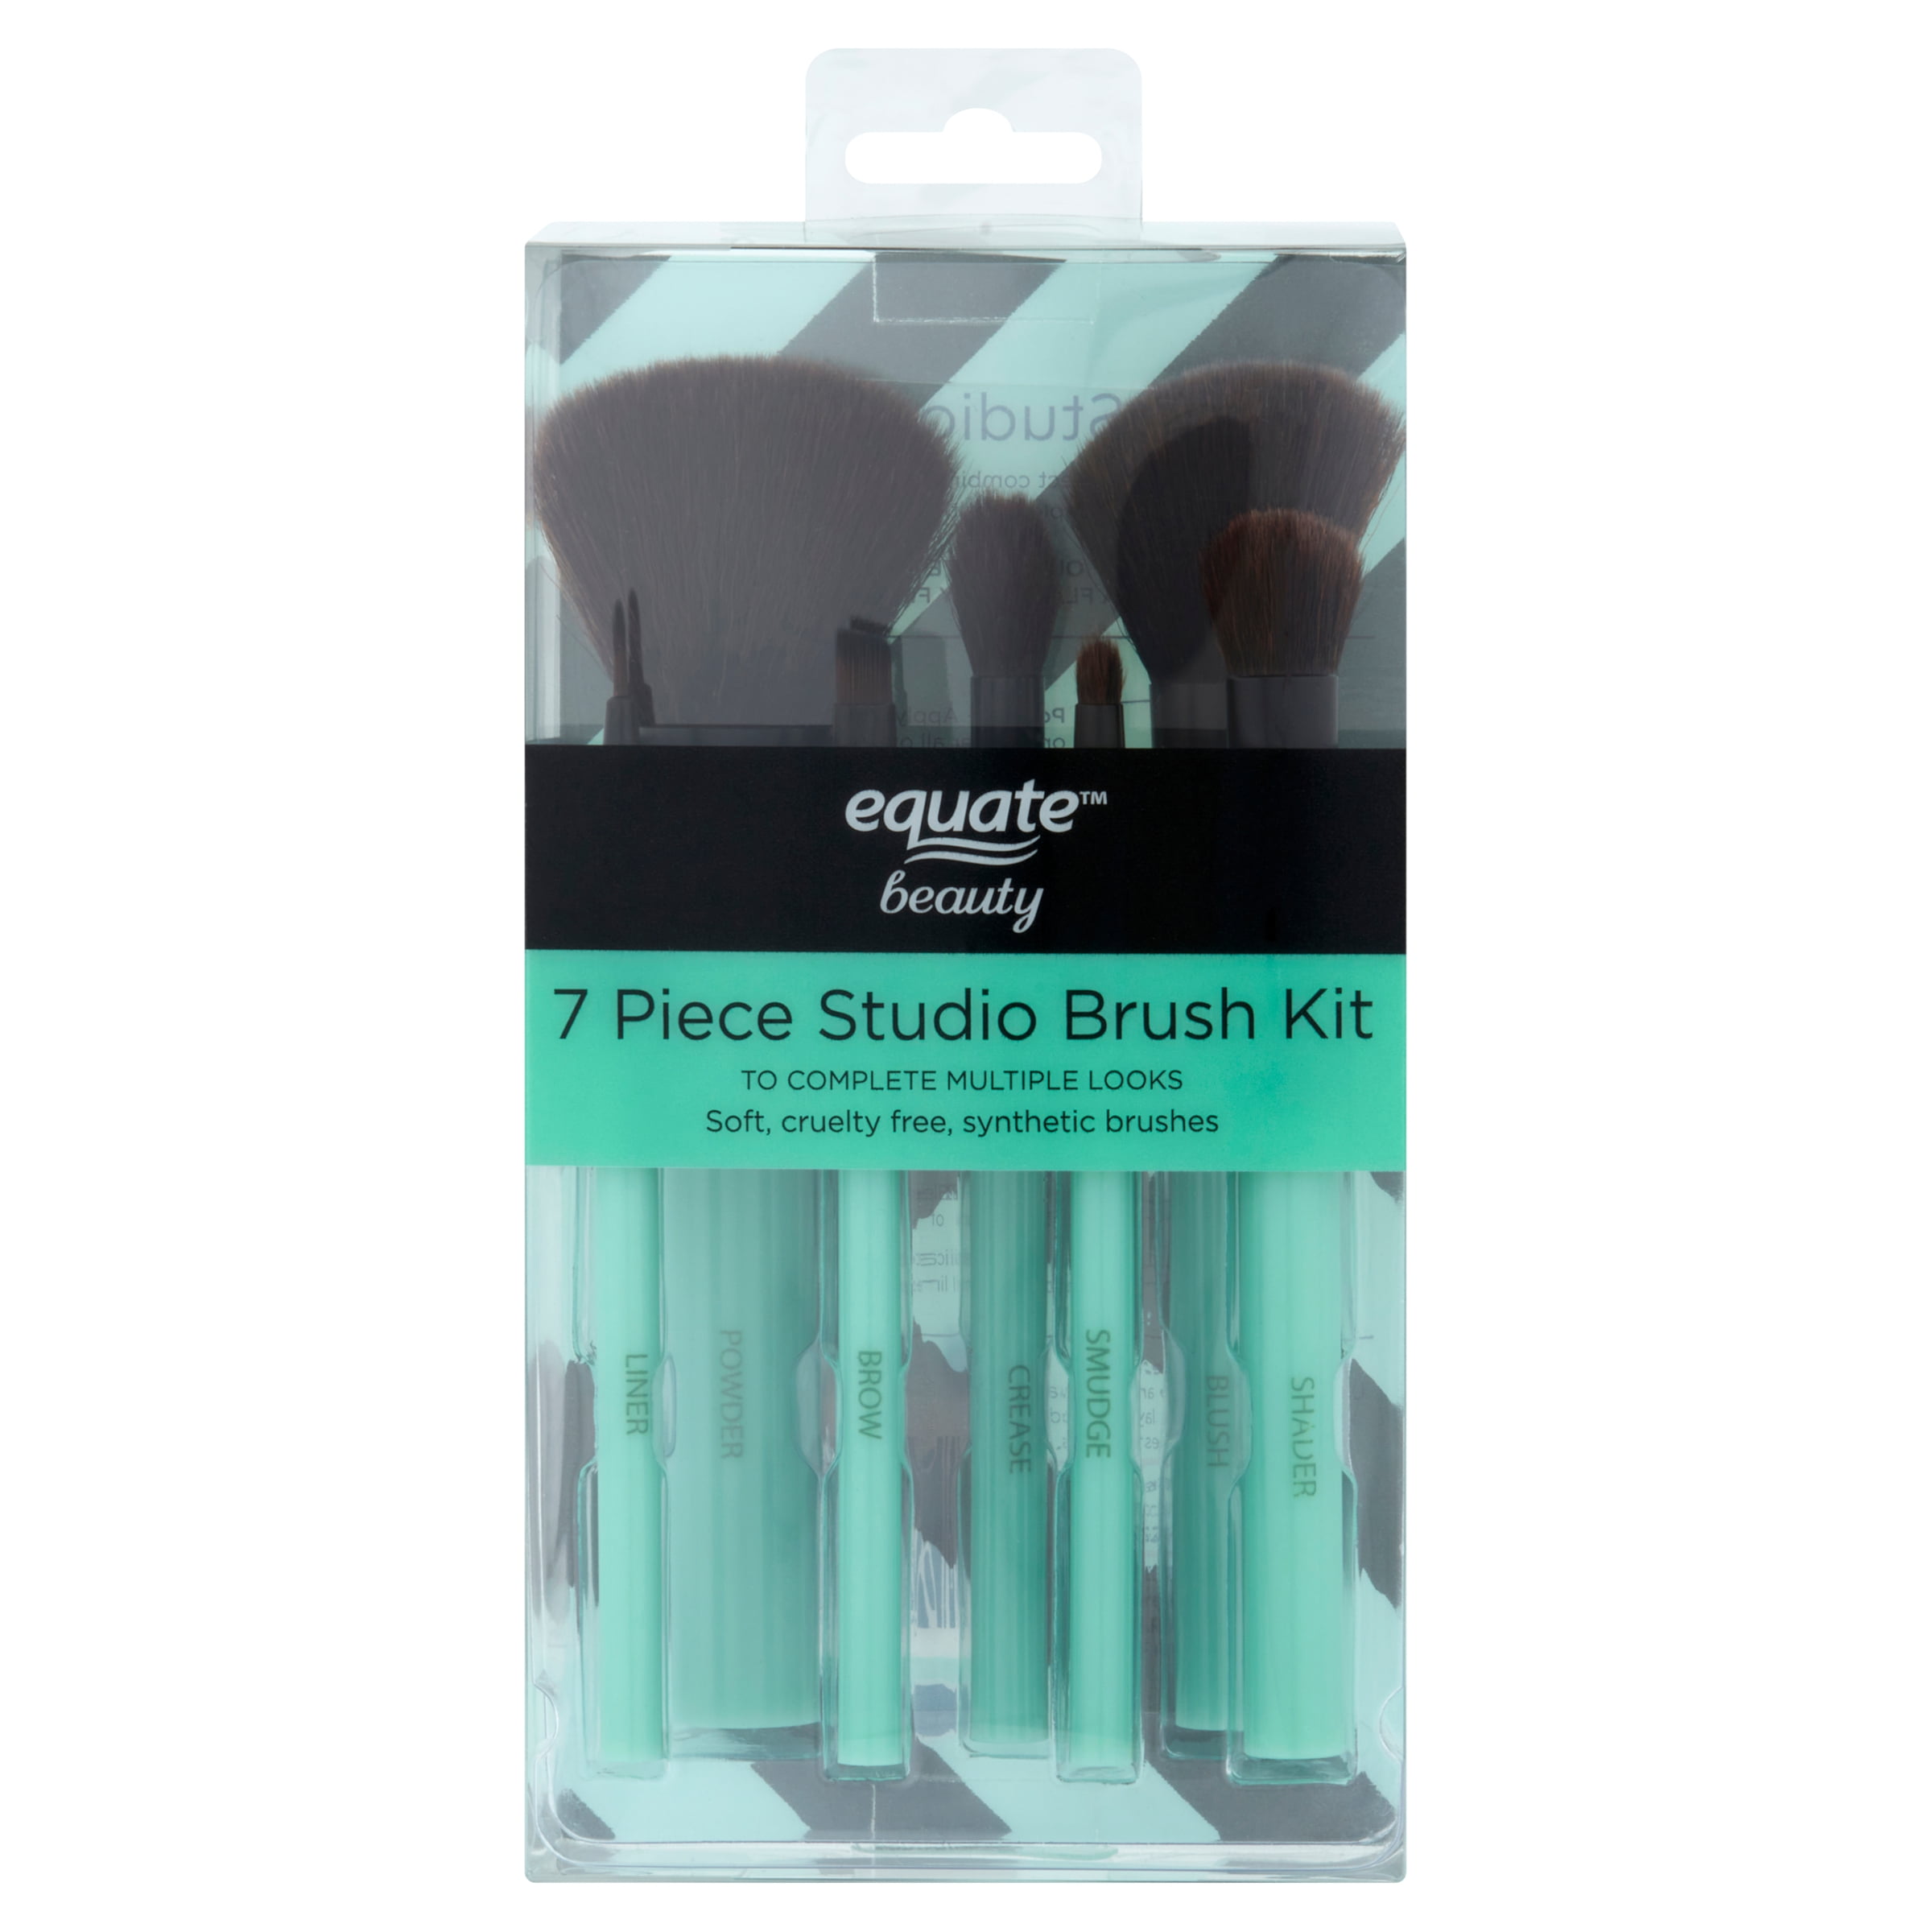 Equate Beauty 7-Piece Studio Brush Kit